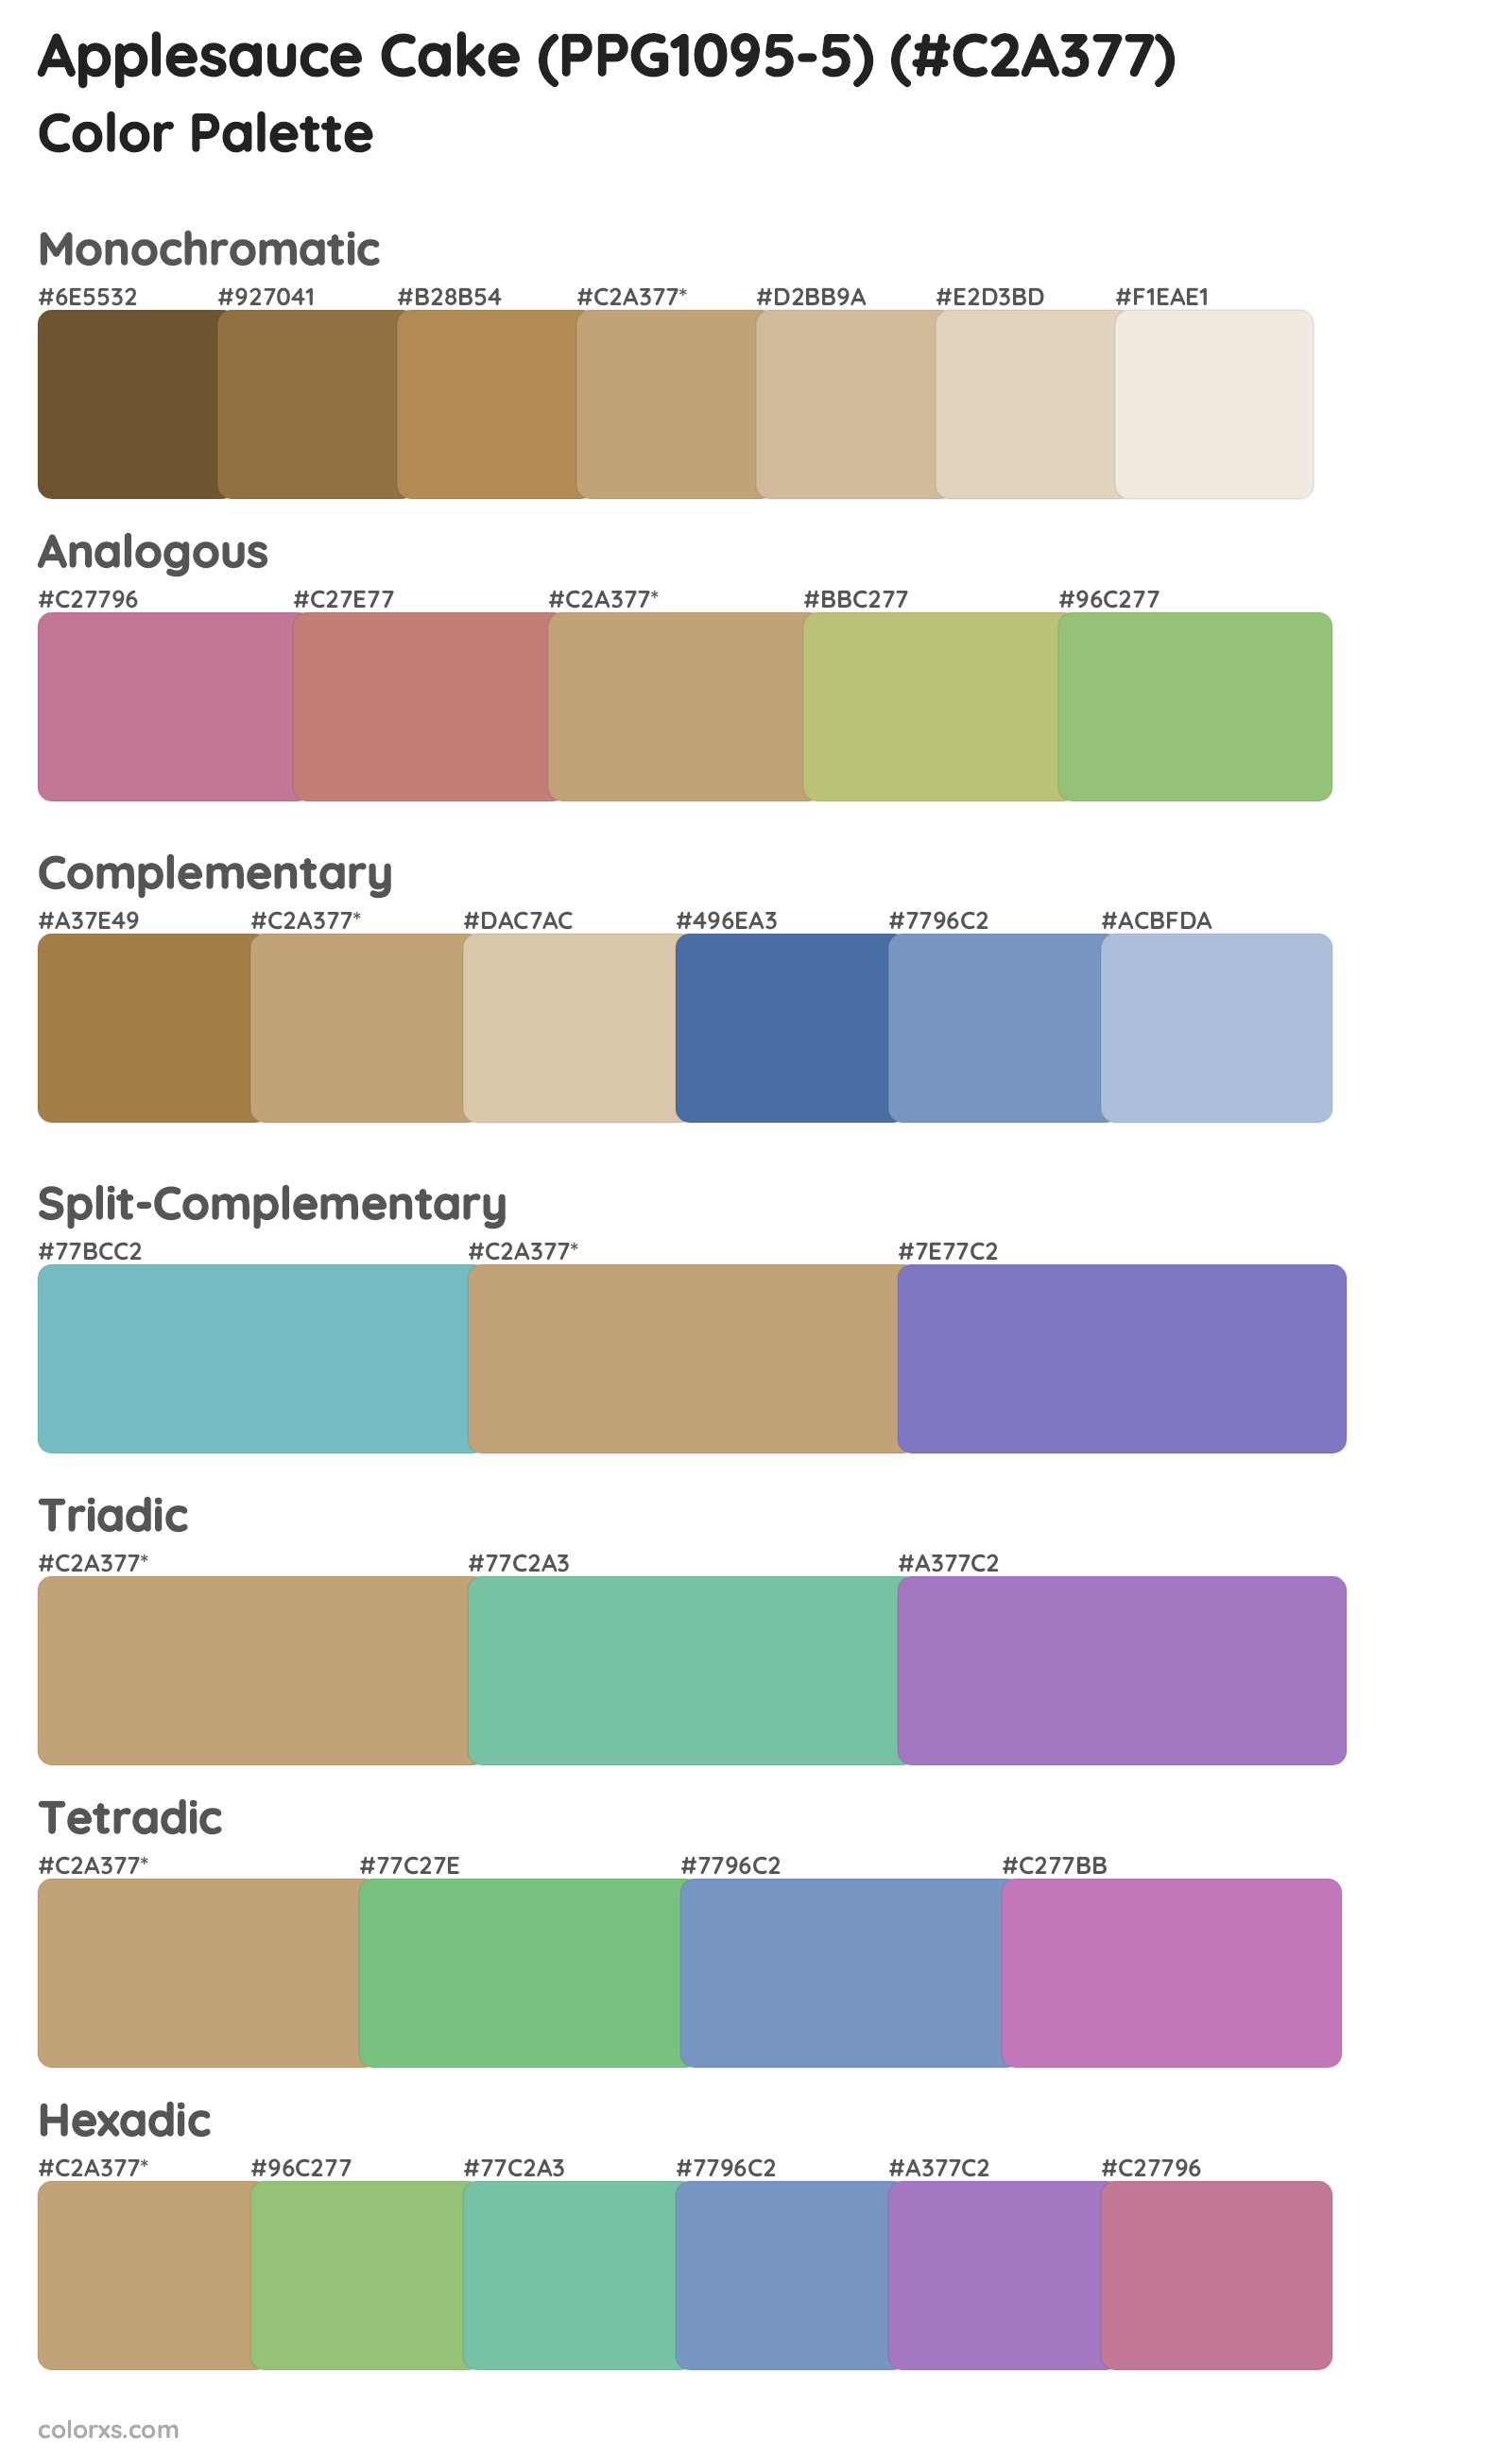 Applesauce Cake (PPG1095-5) Color Scheme Palettes